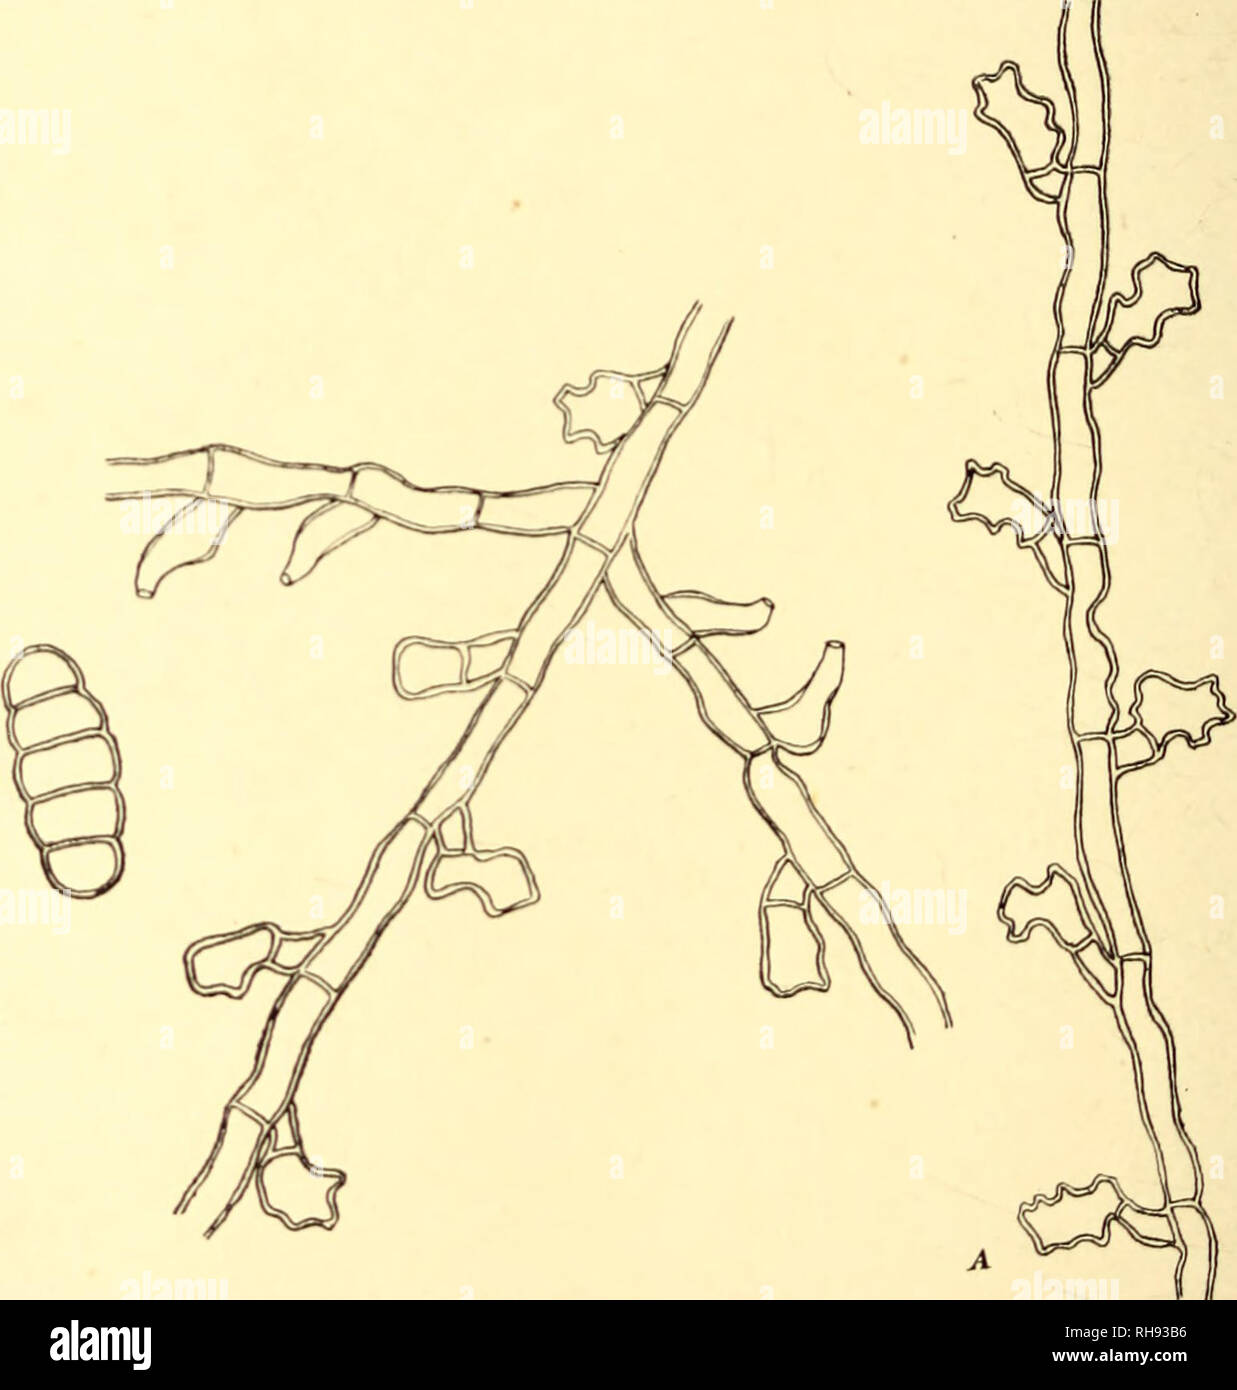 . Bothalia. Botany. Fig* mutua preBsione angulata v. compressa, áOO-430 ;a diametro, radiatim ex hyphis 4-5 (/, crassis contexta, ad ambitum hand fimbriata. Afcci paraphysati, octospori, globosi v. aubpyriformi, 50-53 l diametro vel 60-64 X 30 l. Sporae conglobatae, hyalinae, 1-septatae, leniter constrictae, oblongae, utrinque rotundatae, 26-29 x 11 5-13 l. Hab. in foliis Psychotriae capensis, Amanzimtoti, Natal, 10.7.11, leg. Doidge [1575]. sp- rivnlarii 75. Asterina rotonicola n. On loaves of Croton rivularis3 Bast London. 19.7.19, Doidge [12427]; Langholm Estates, Bathurst, 14.7.19. Doid Stock Photo